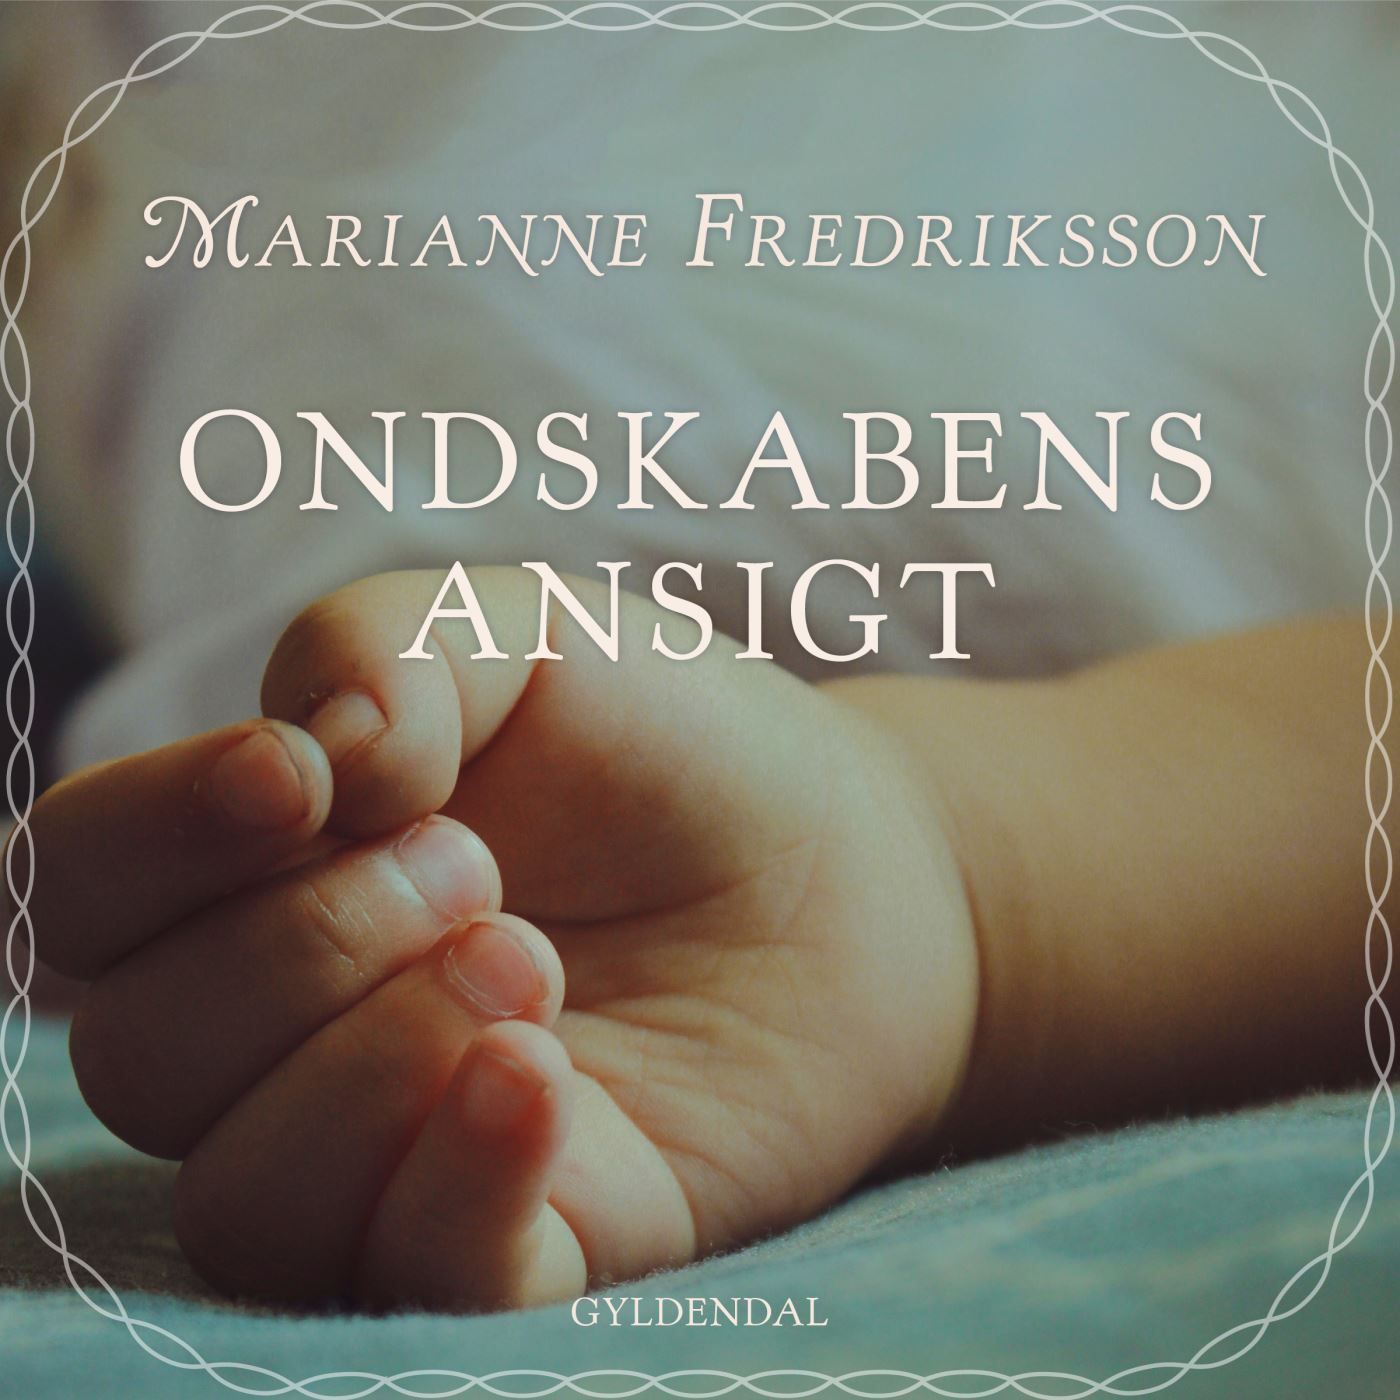 Ondskabens ansigt, audiobook by Marianne Fredriksson